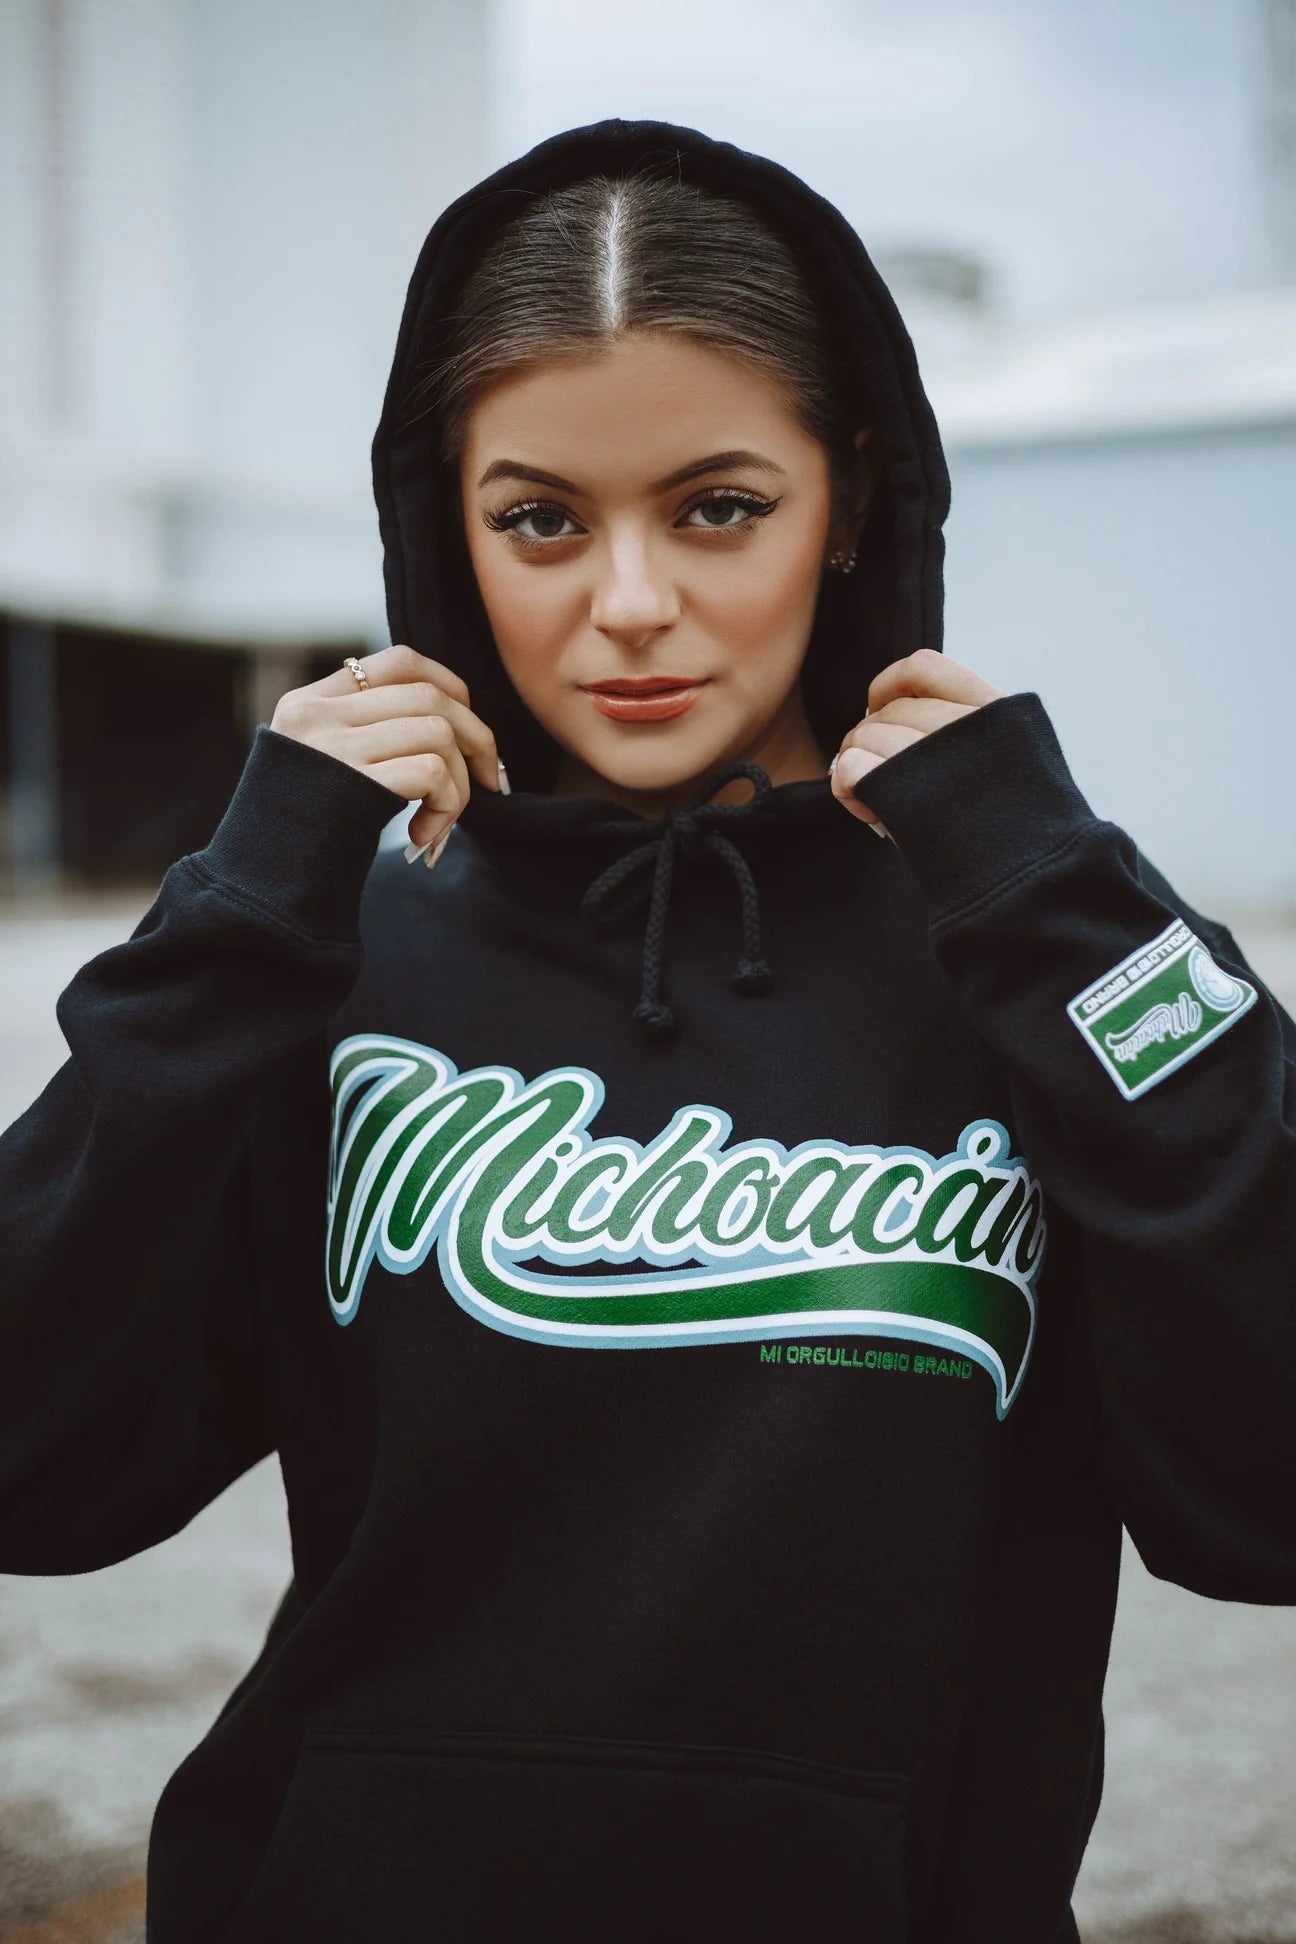 Authentic Michoacan hoodies